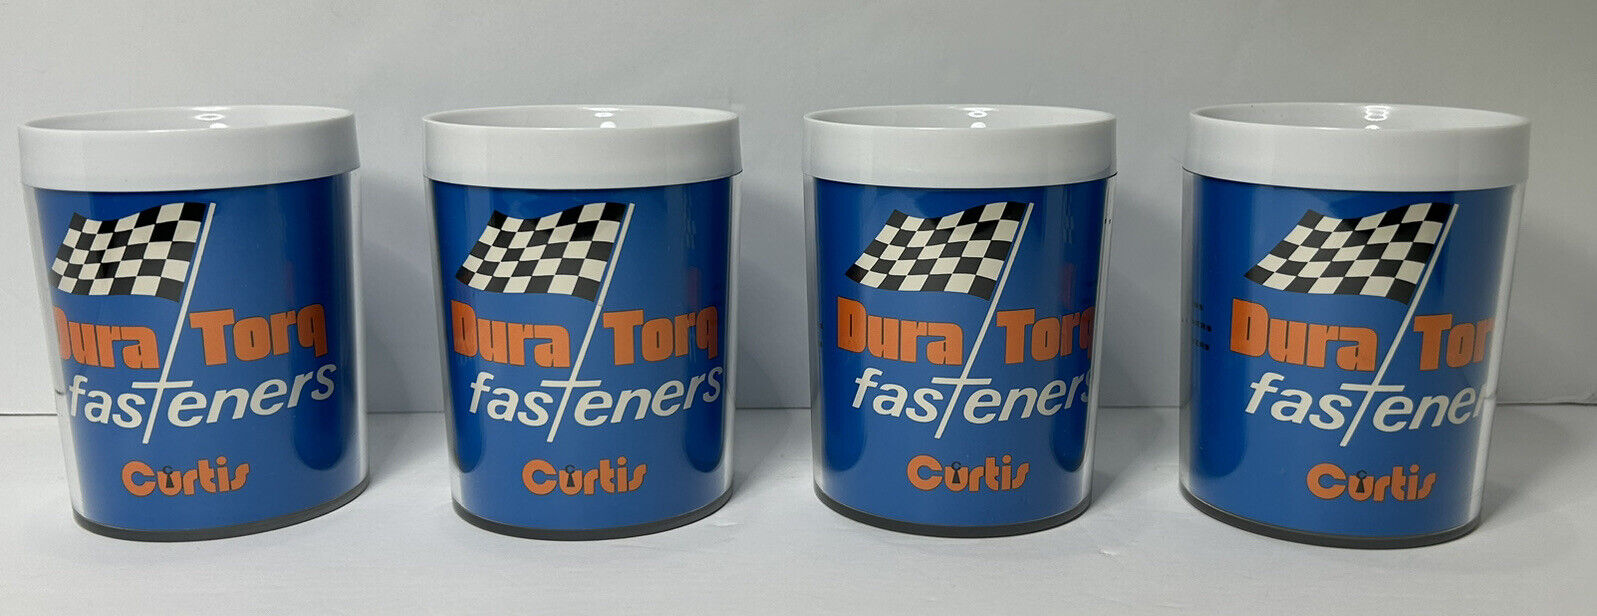 4 Curtis Dura-Torq Fasteners Plastic Mug Cup Advertising Racing Checkered Flag